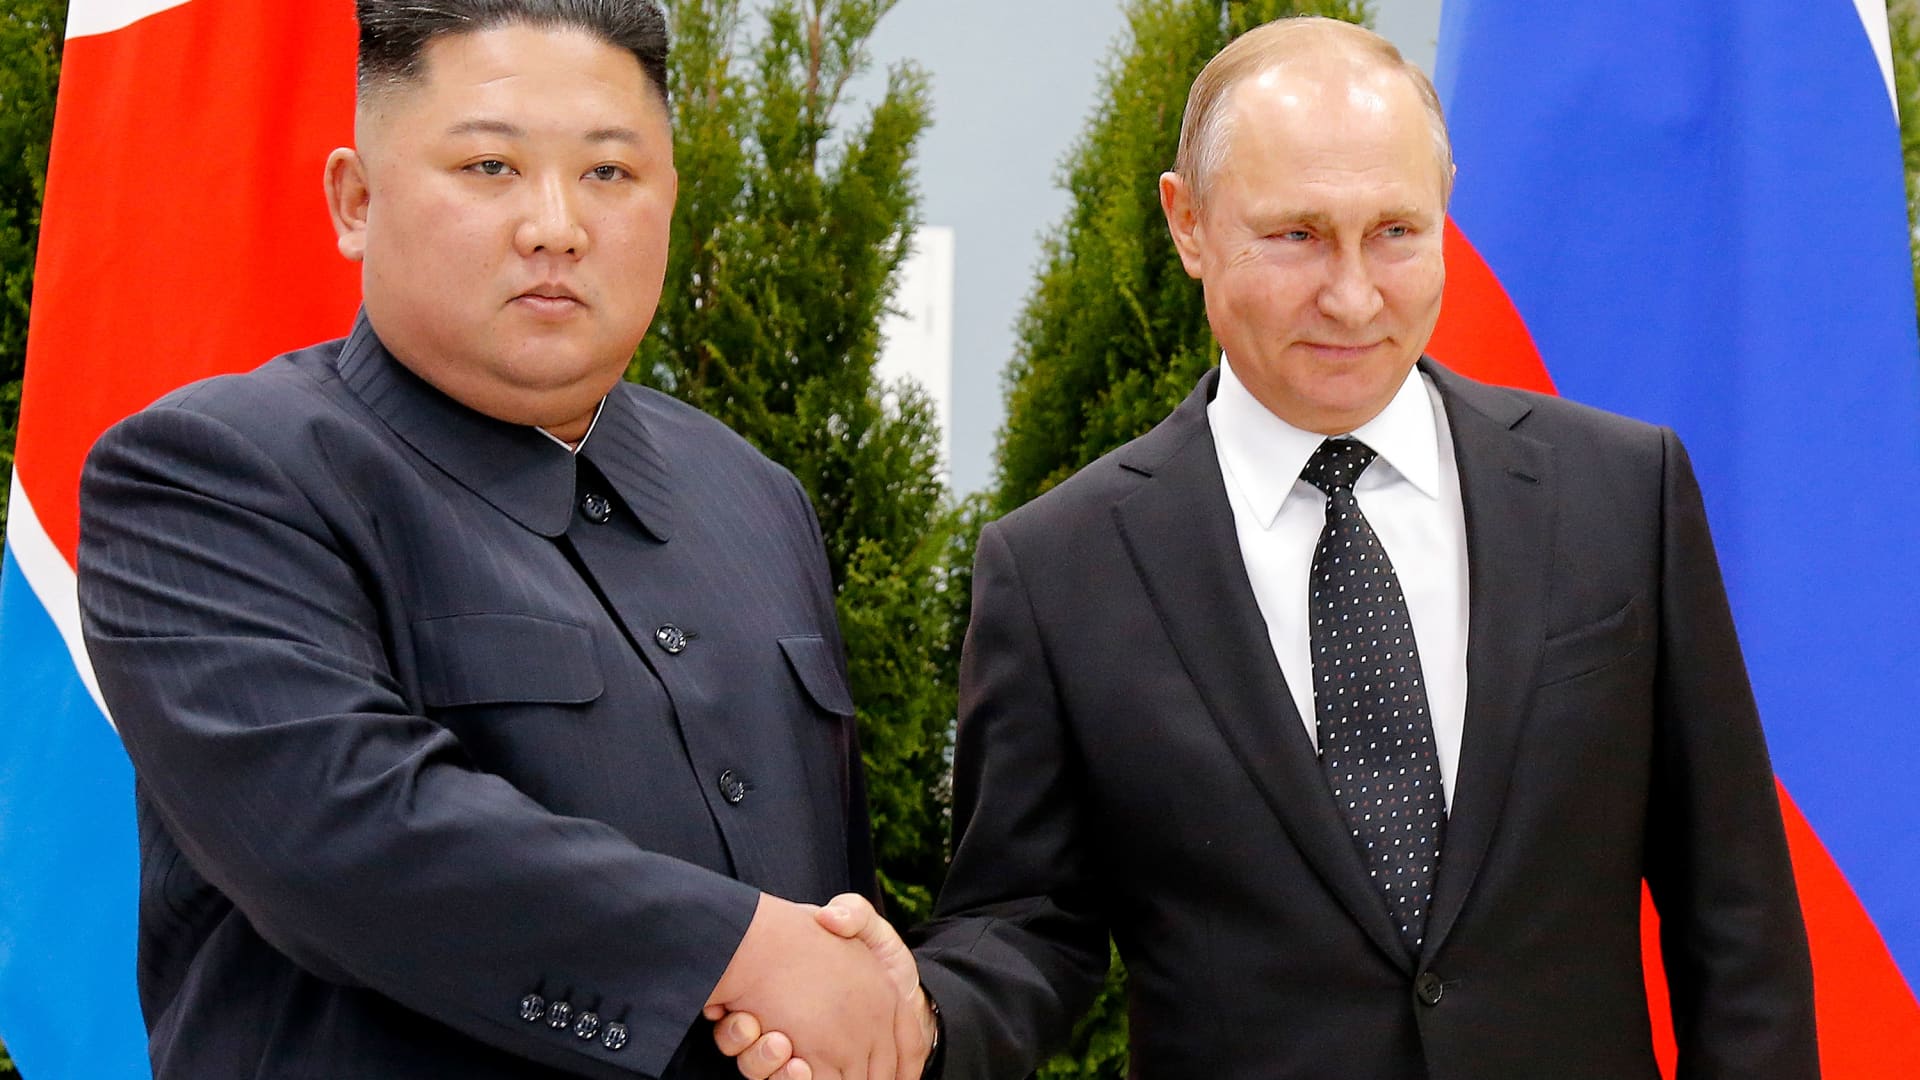 Russian President Vladimir Putin, right, and North Korea's leader Kim Jong Un shake hands during their meeting in Vladivostok, Russia, Thursday, April 25, 2019.